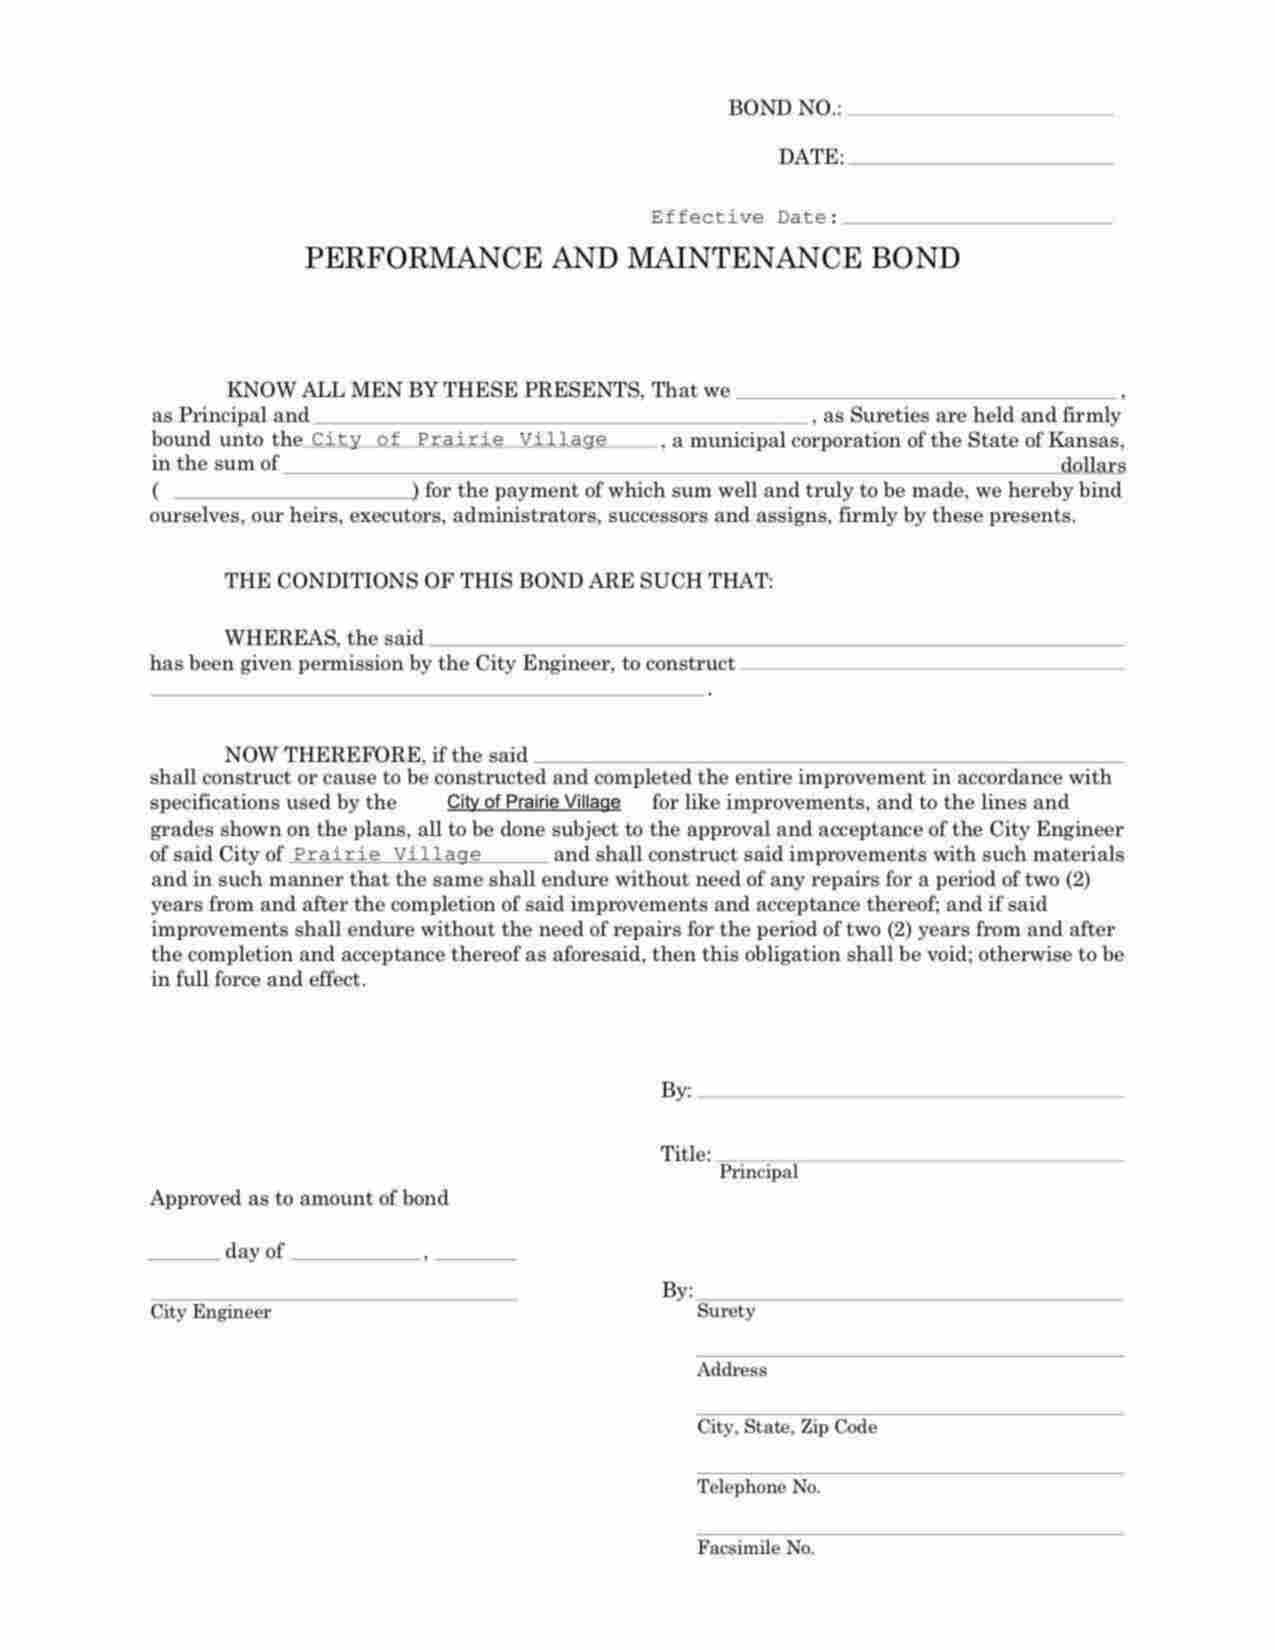 Kansas Performance and Maintenance Bond Form